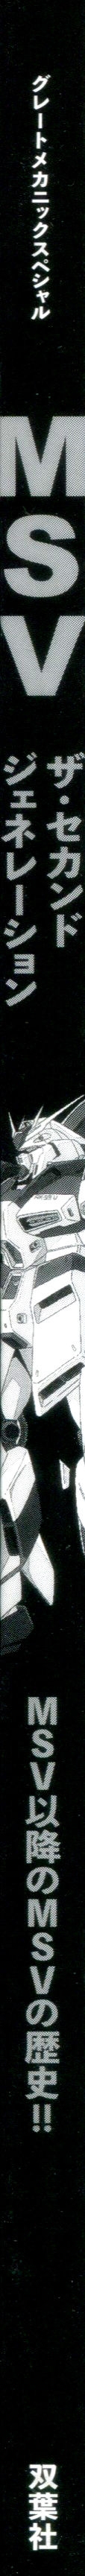 Mobile Suit Gundam - MSV The Second - Generation 1986-1993 116